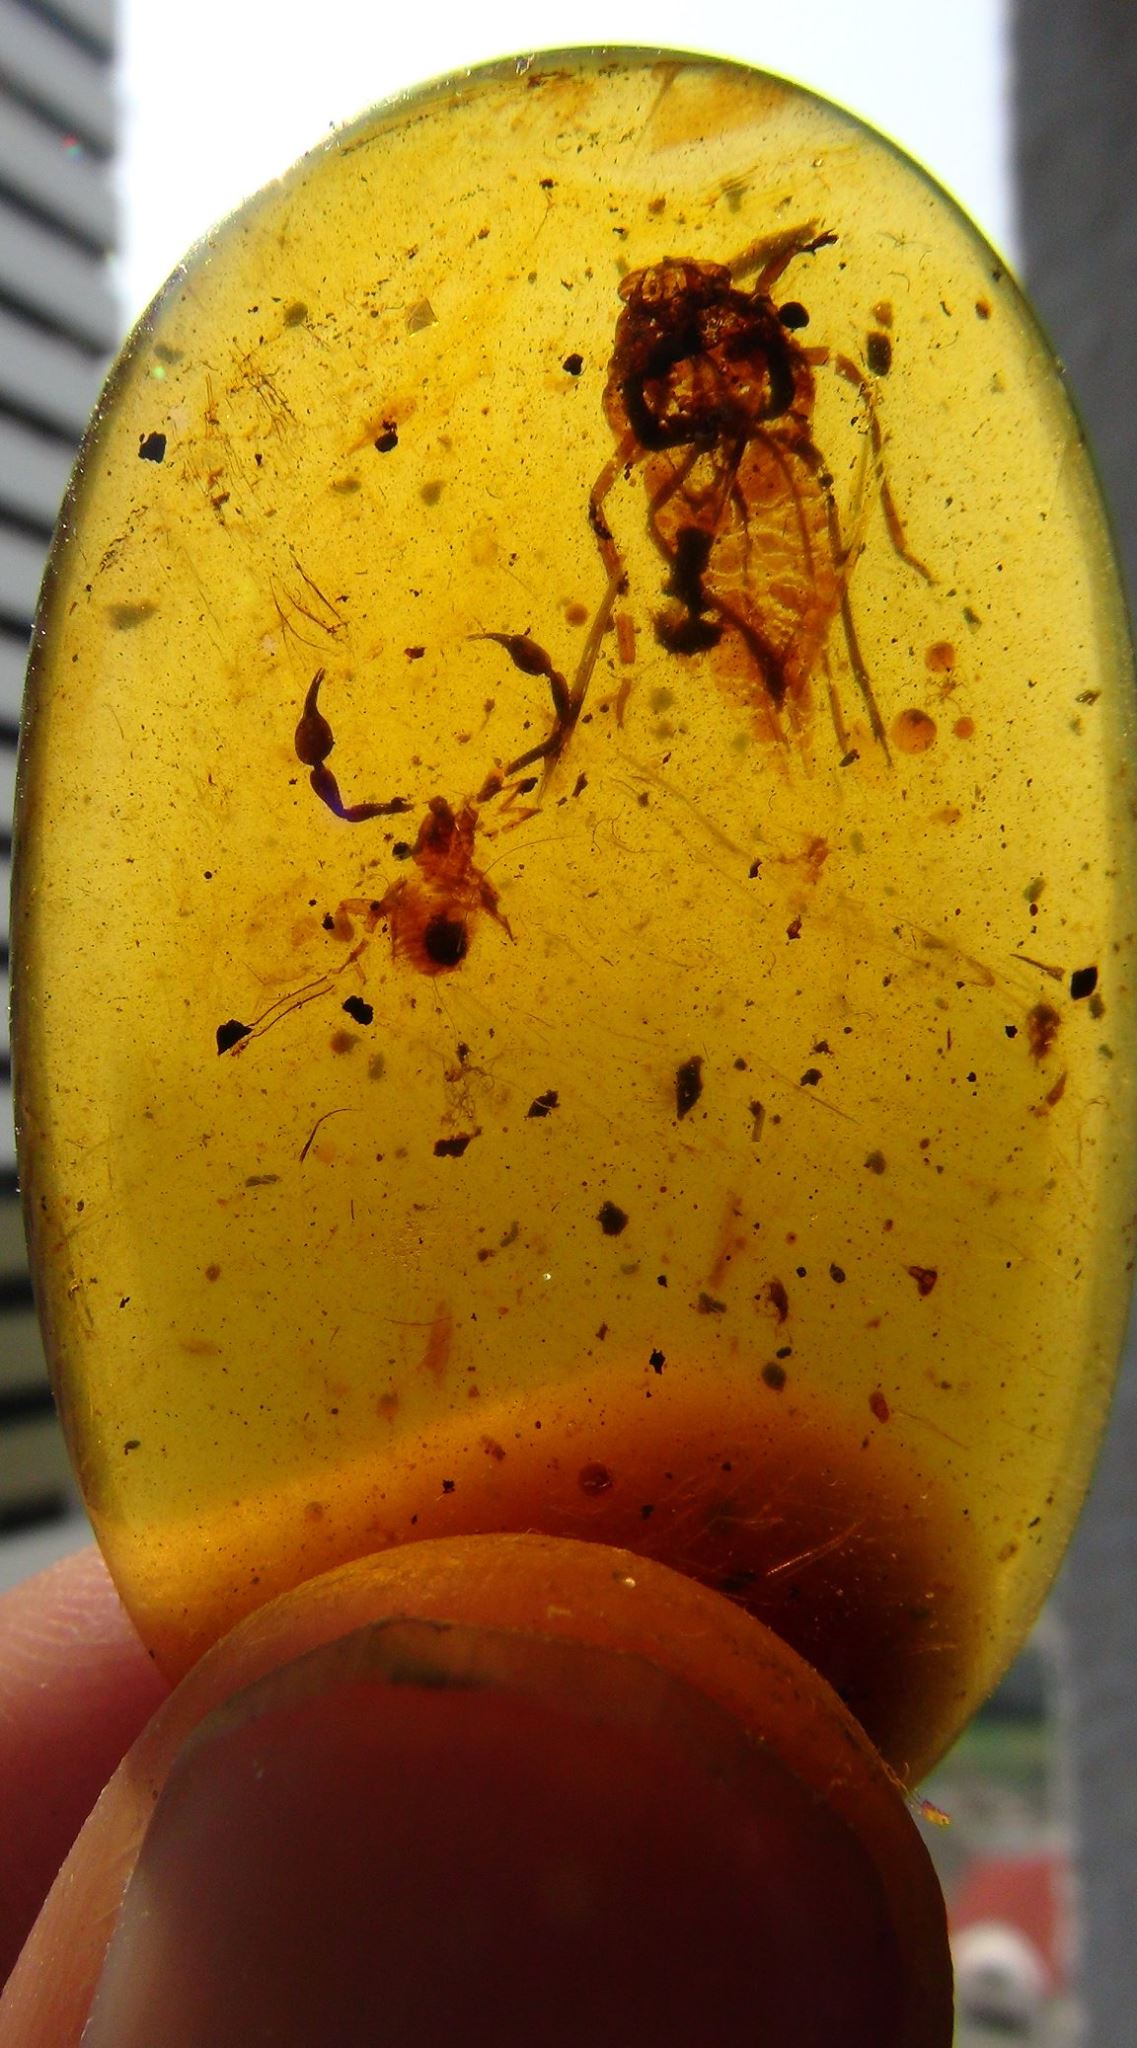 Pseudoscorpion in amber